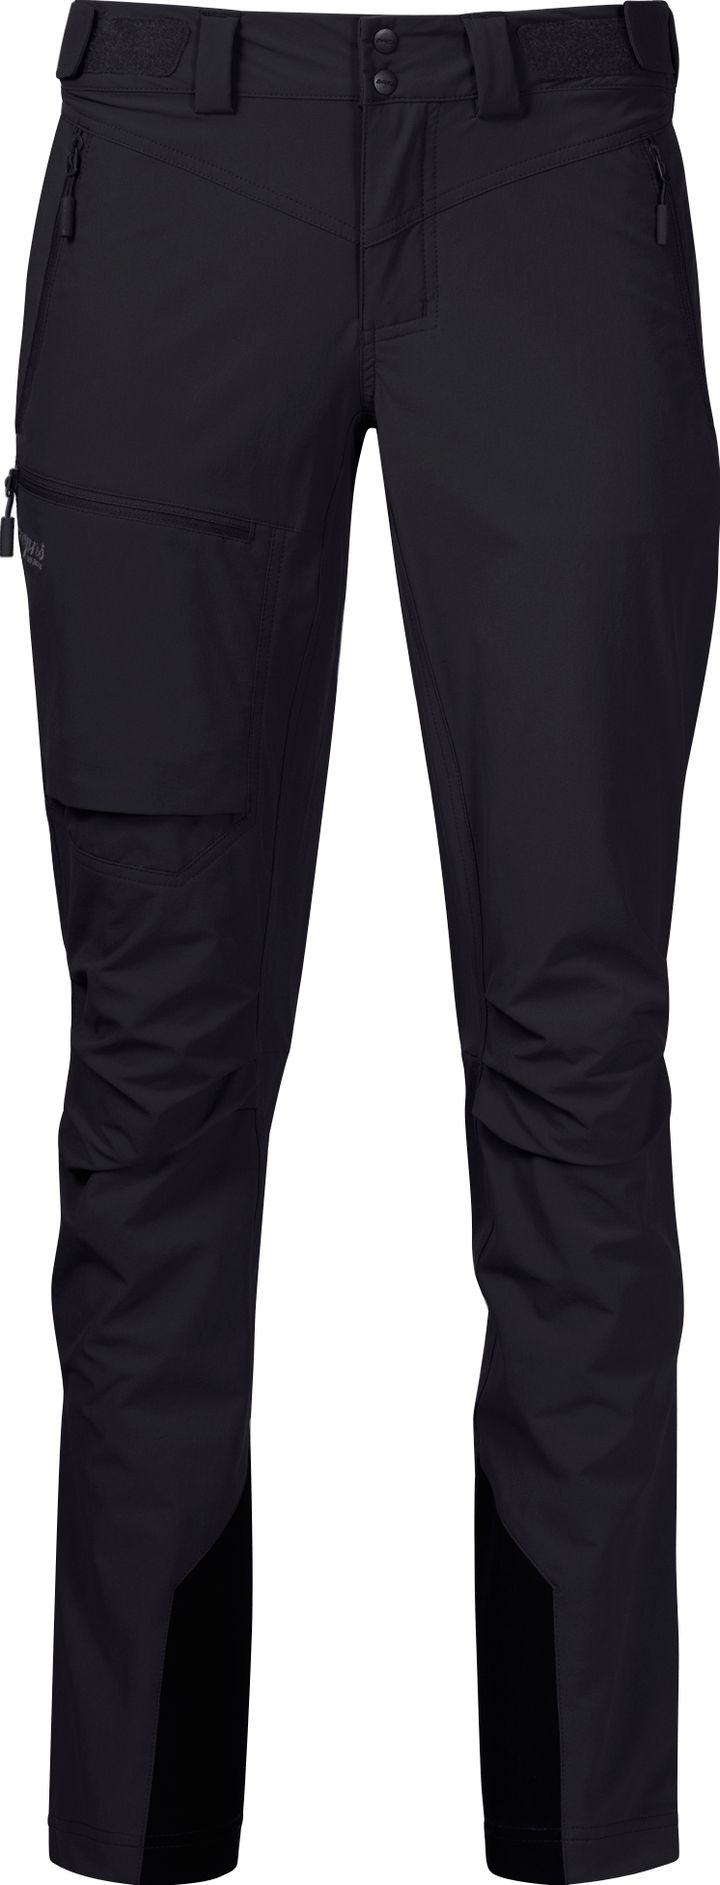 Women's Breheimen Softshell Pants Black/Solid Charcoal Bergans